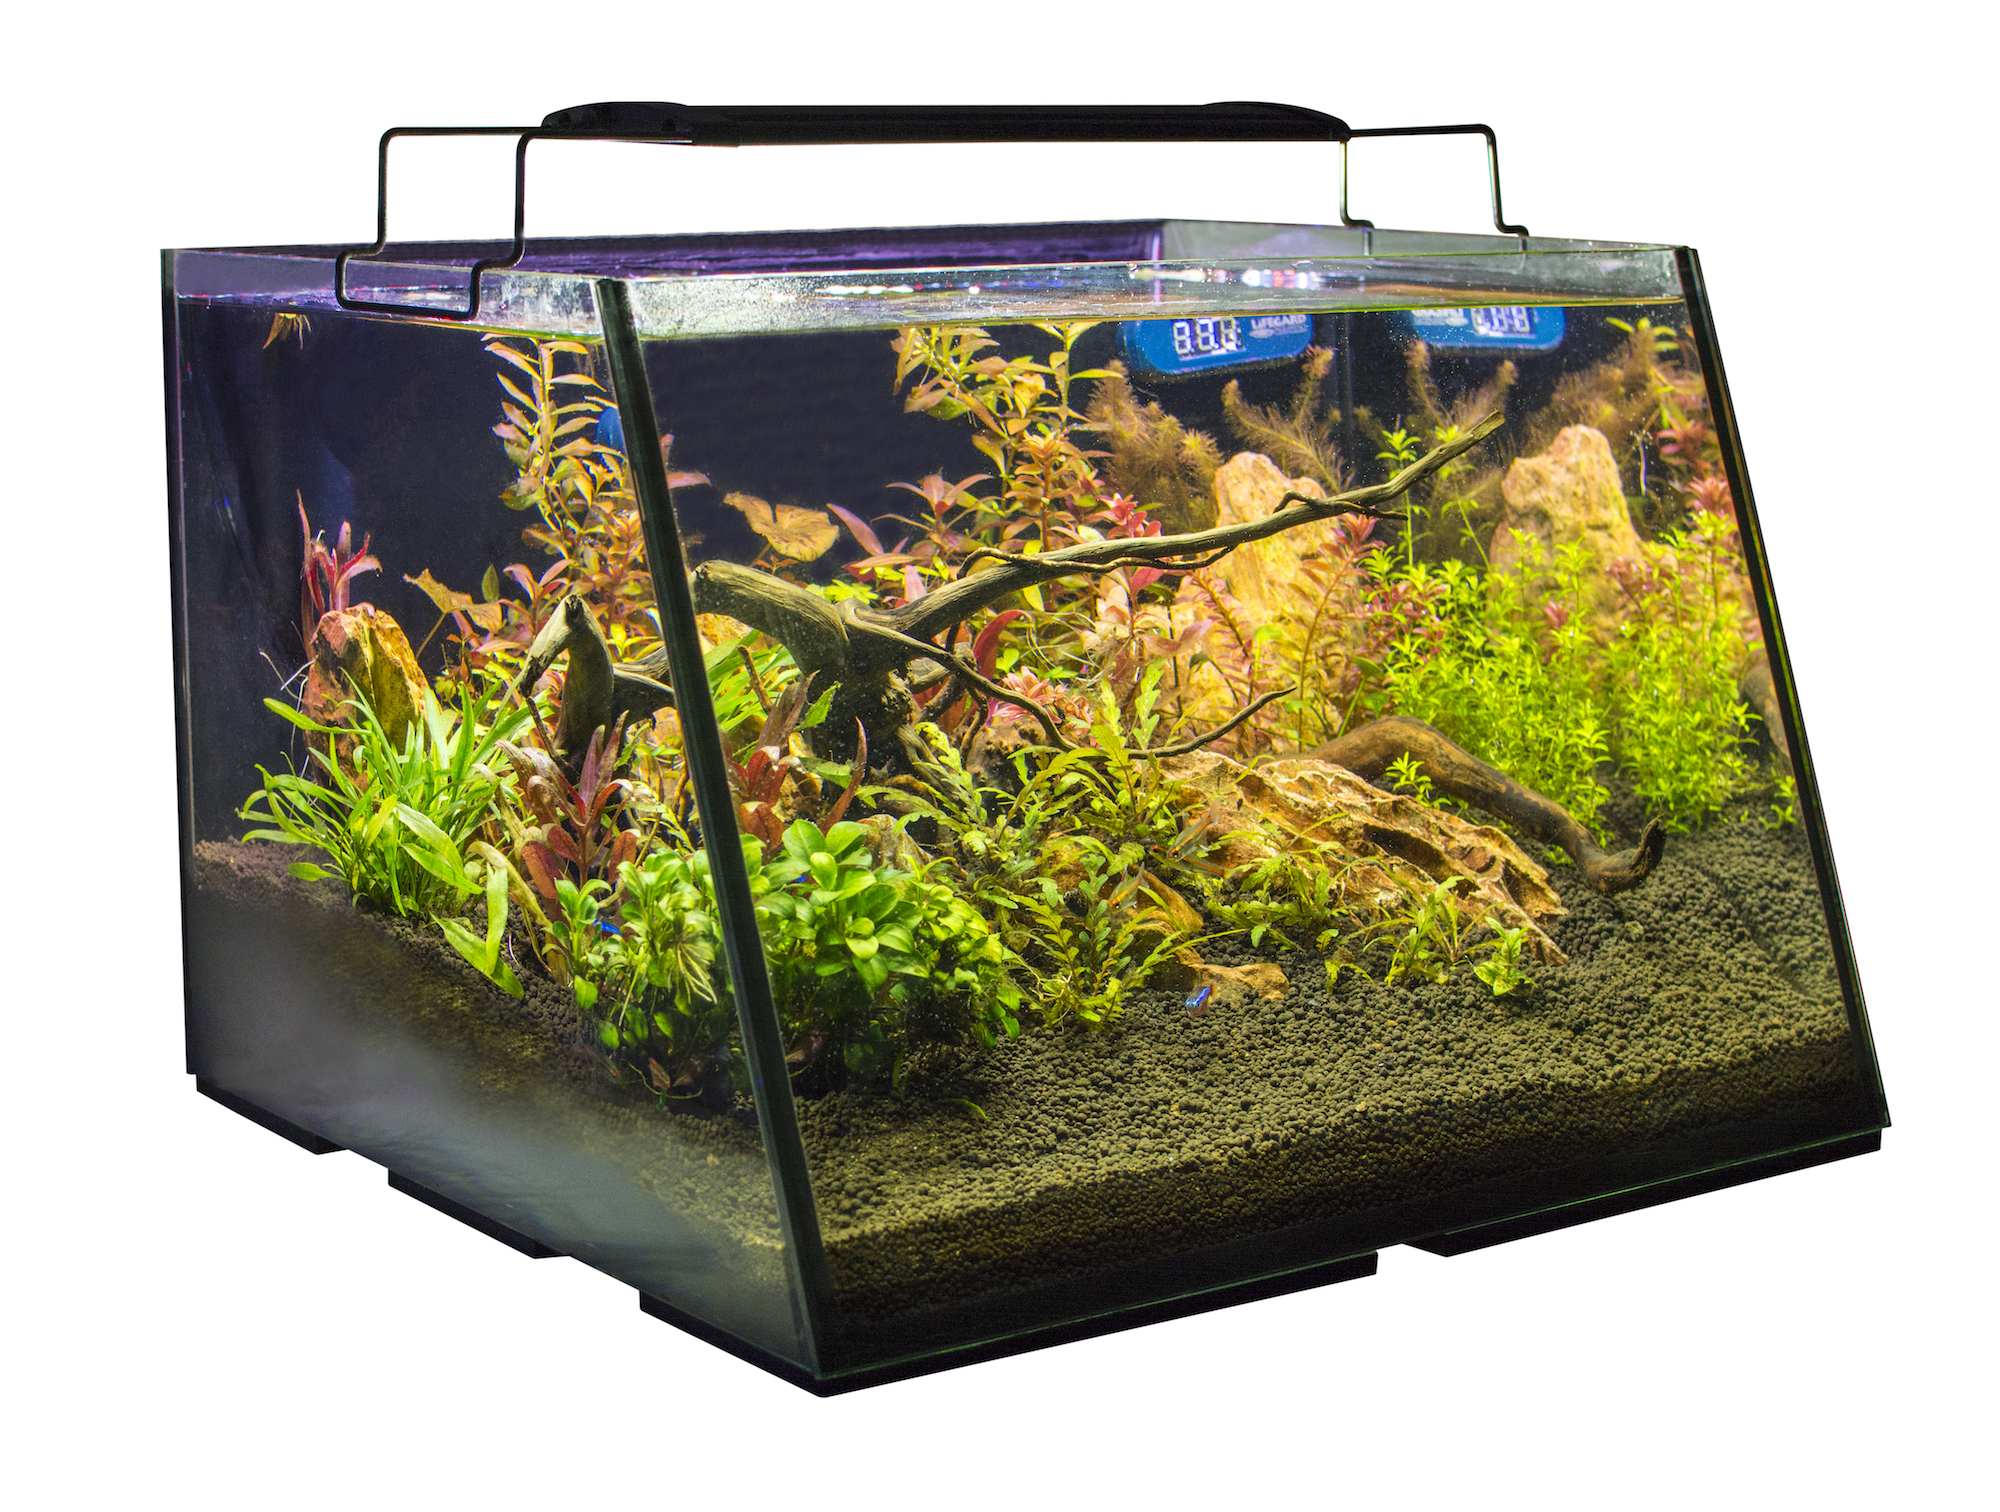 Lifegard Full-View 5 Gallon Aquarium with LED Light, Submersible Filter, 100 Watt Preset Heater, Magnetic Algae Scrub Brush, LED Thermometer, and Net - image 1 of 9